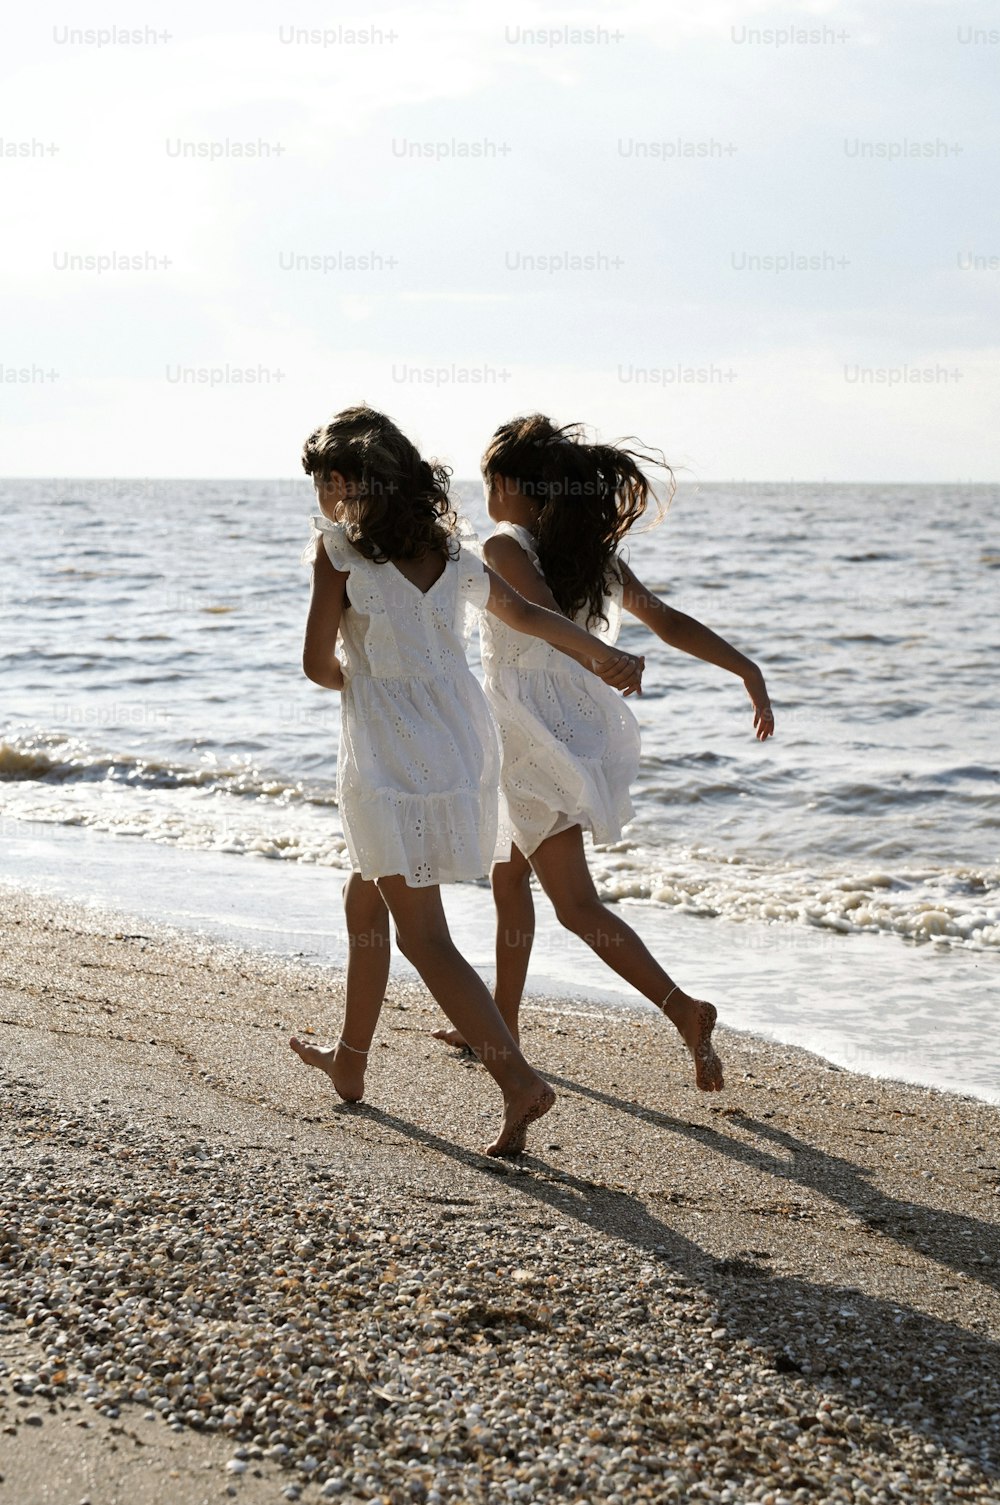 two young girls run along the beach towards the water